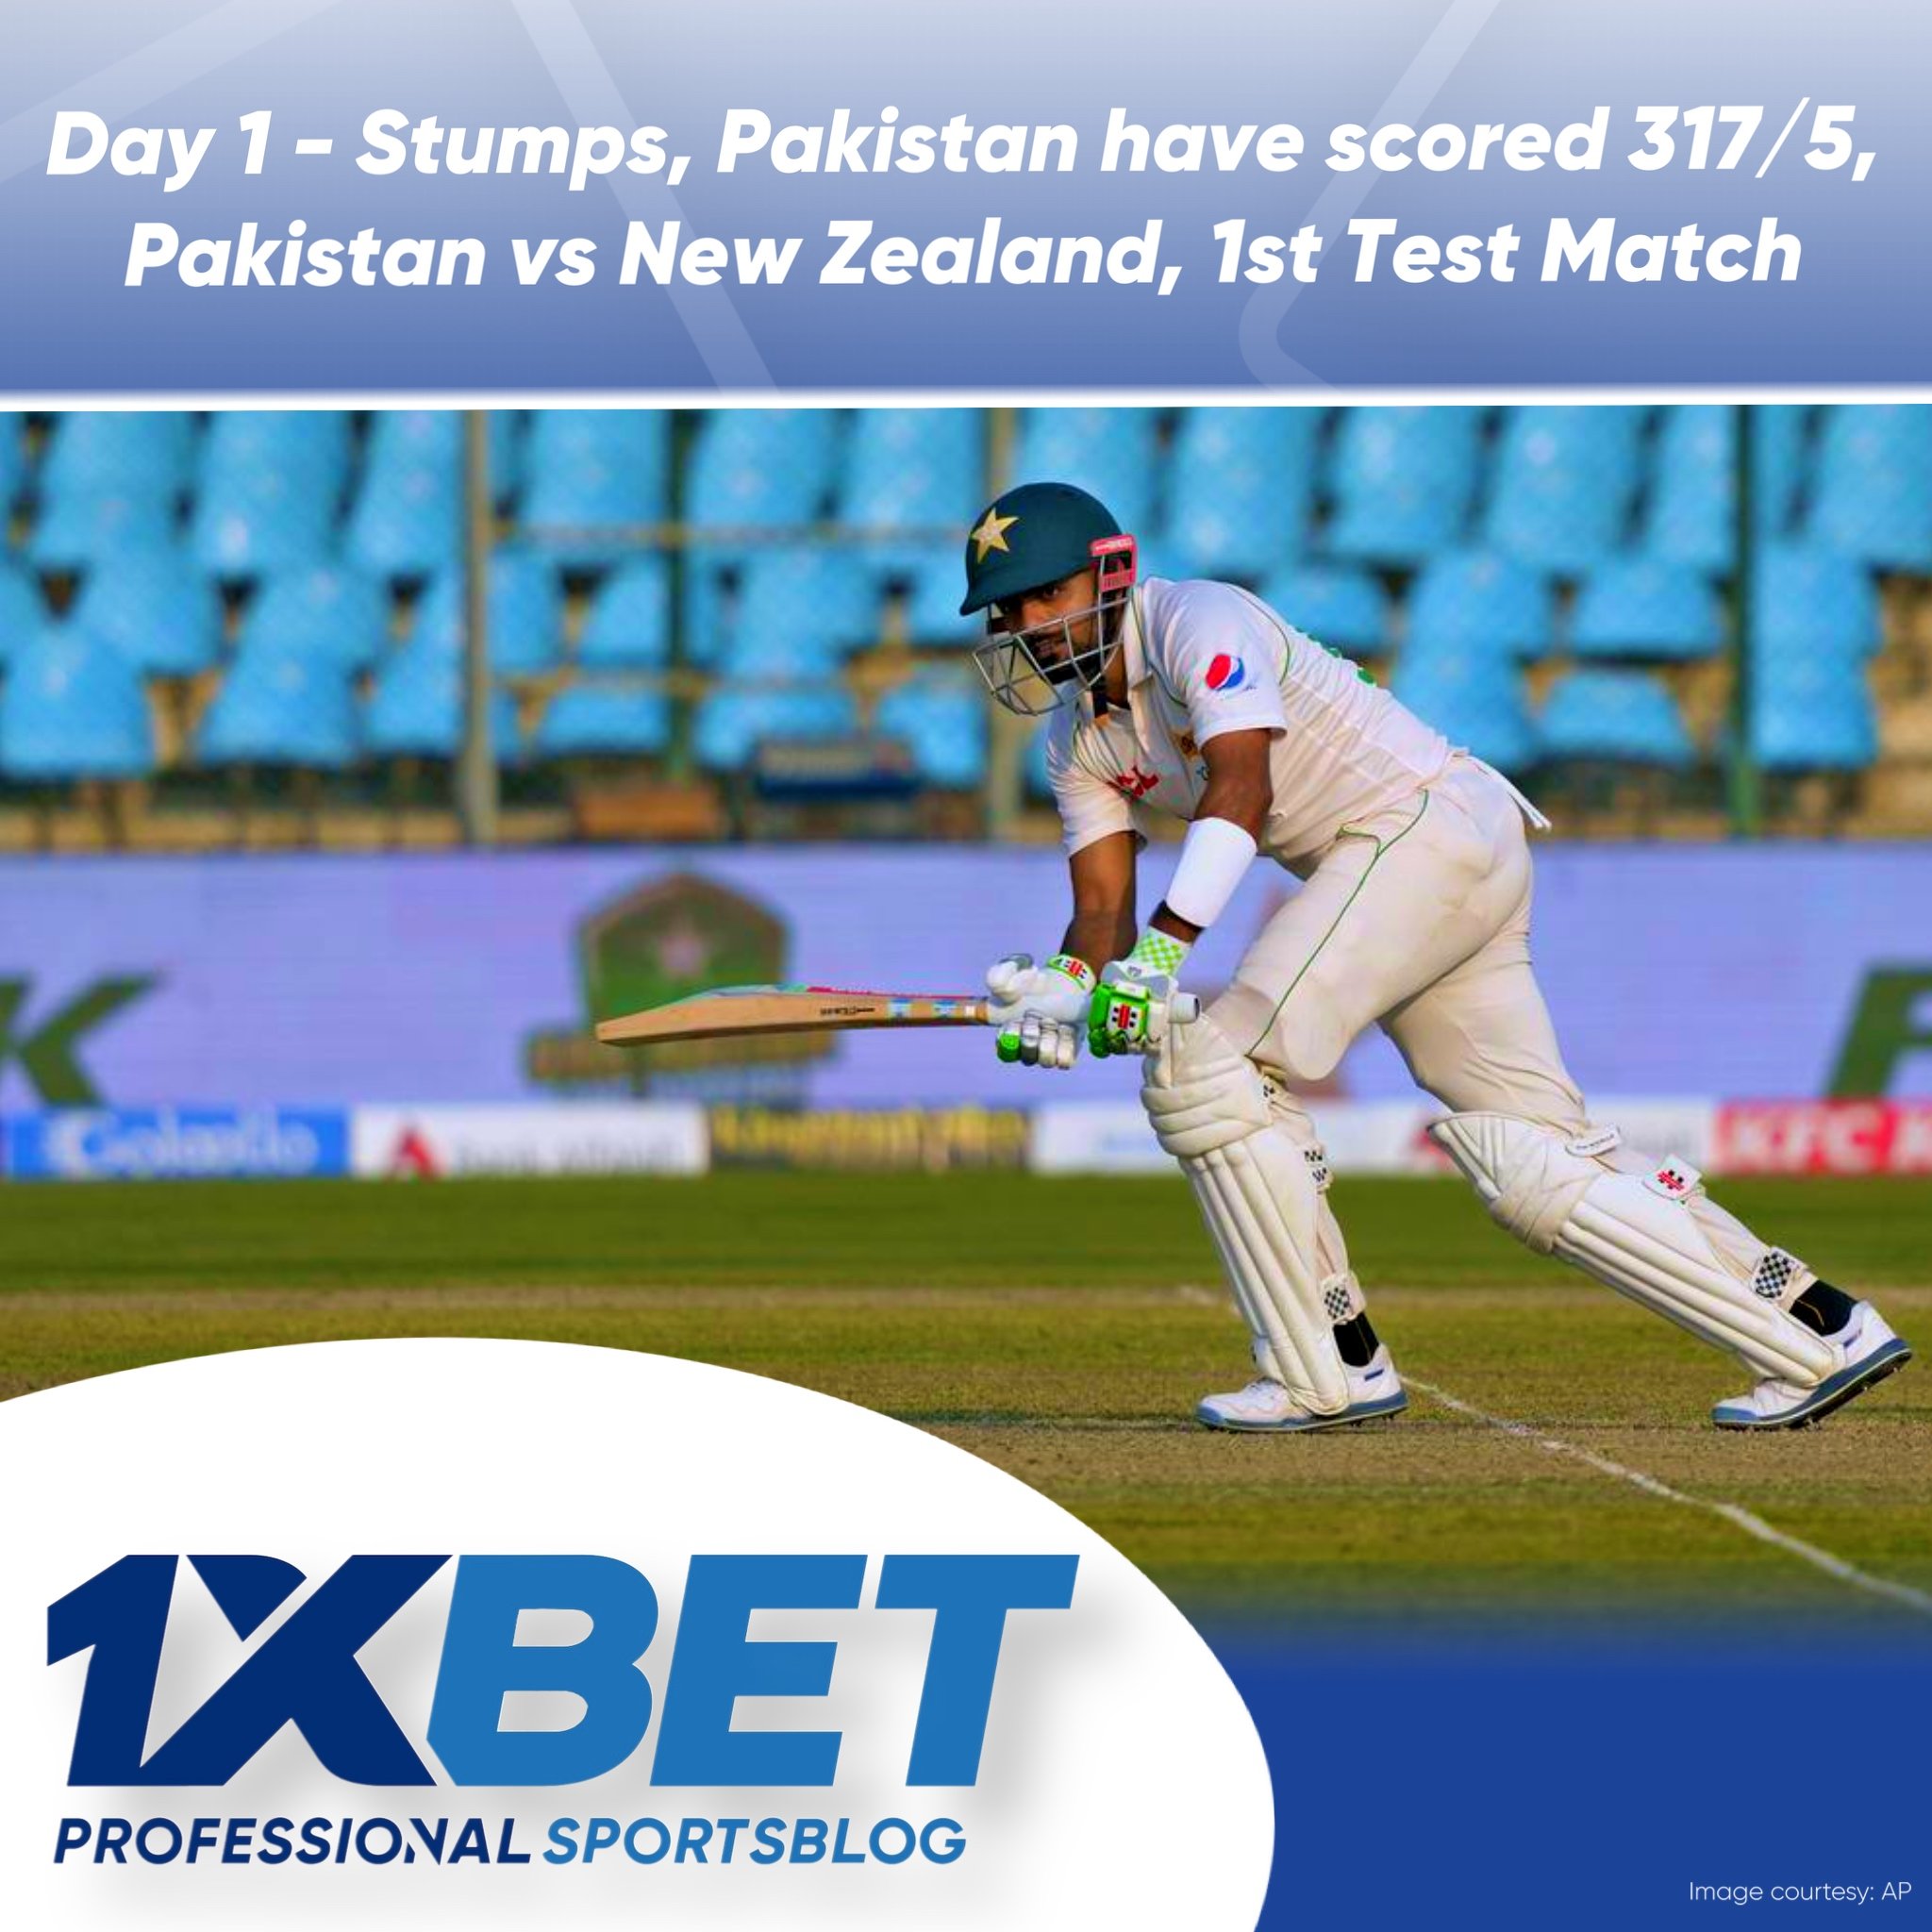 Pakistan have scored 317 runs